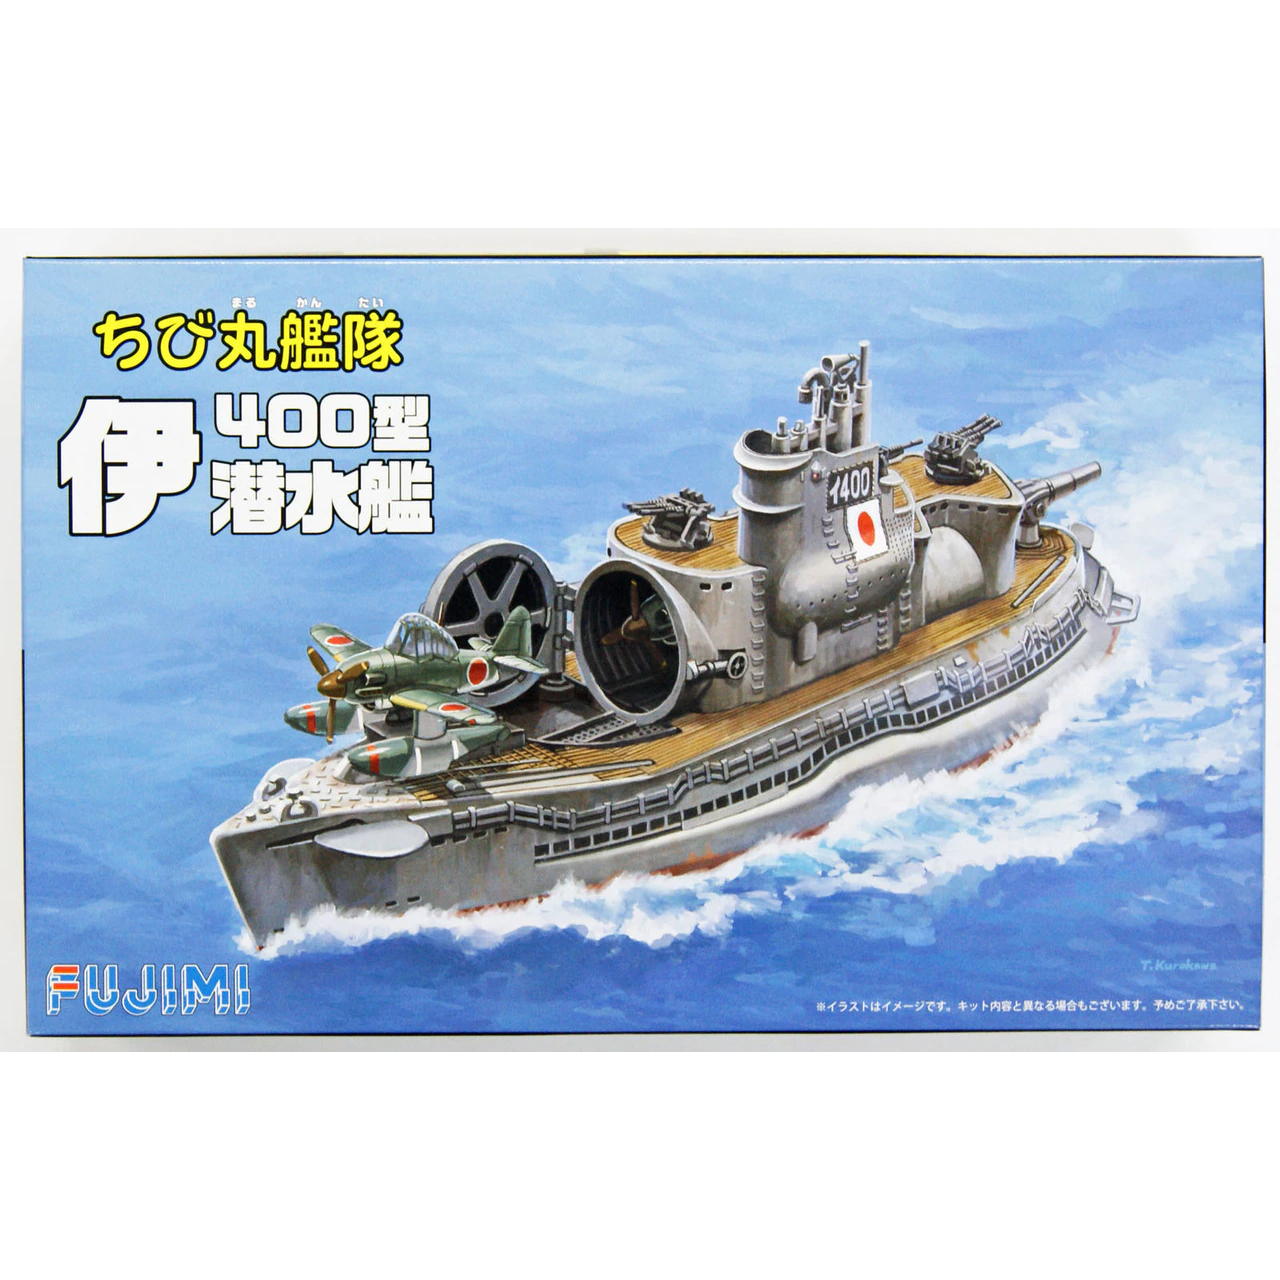 Chibimaru Submarine/Ship 1/400 Super Deformed Model Ship Kit#421995 by Fujimi